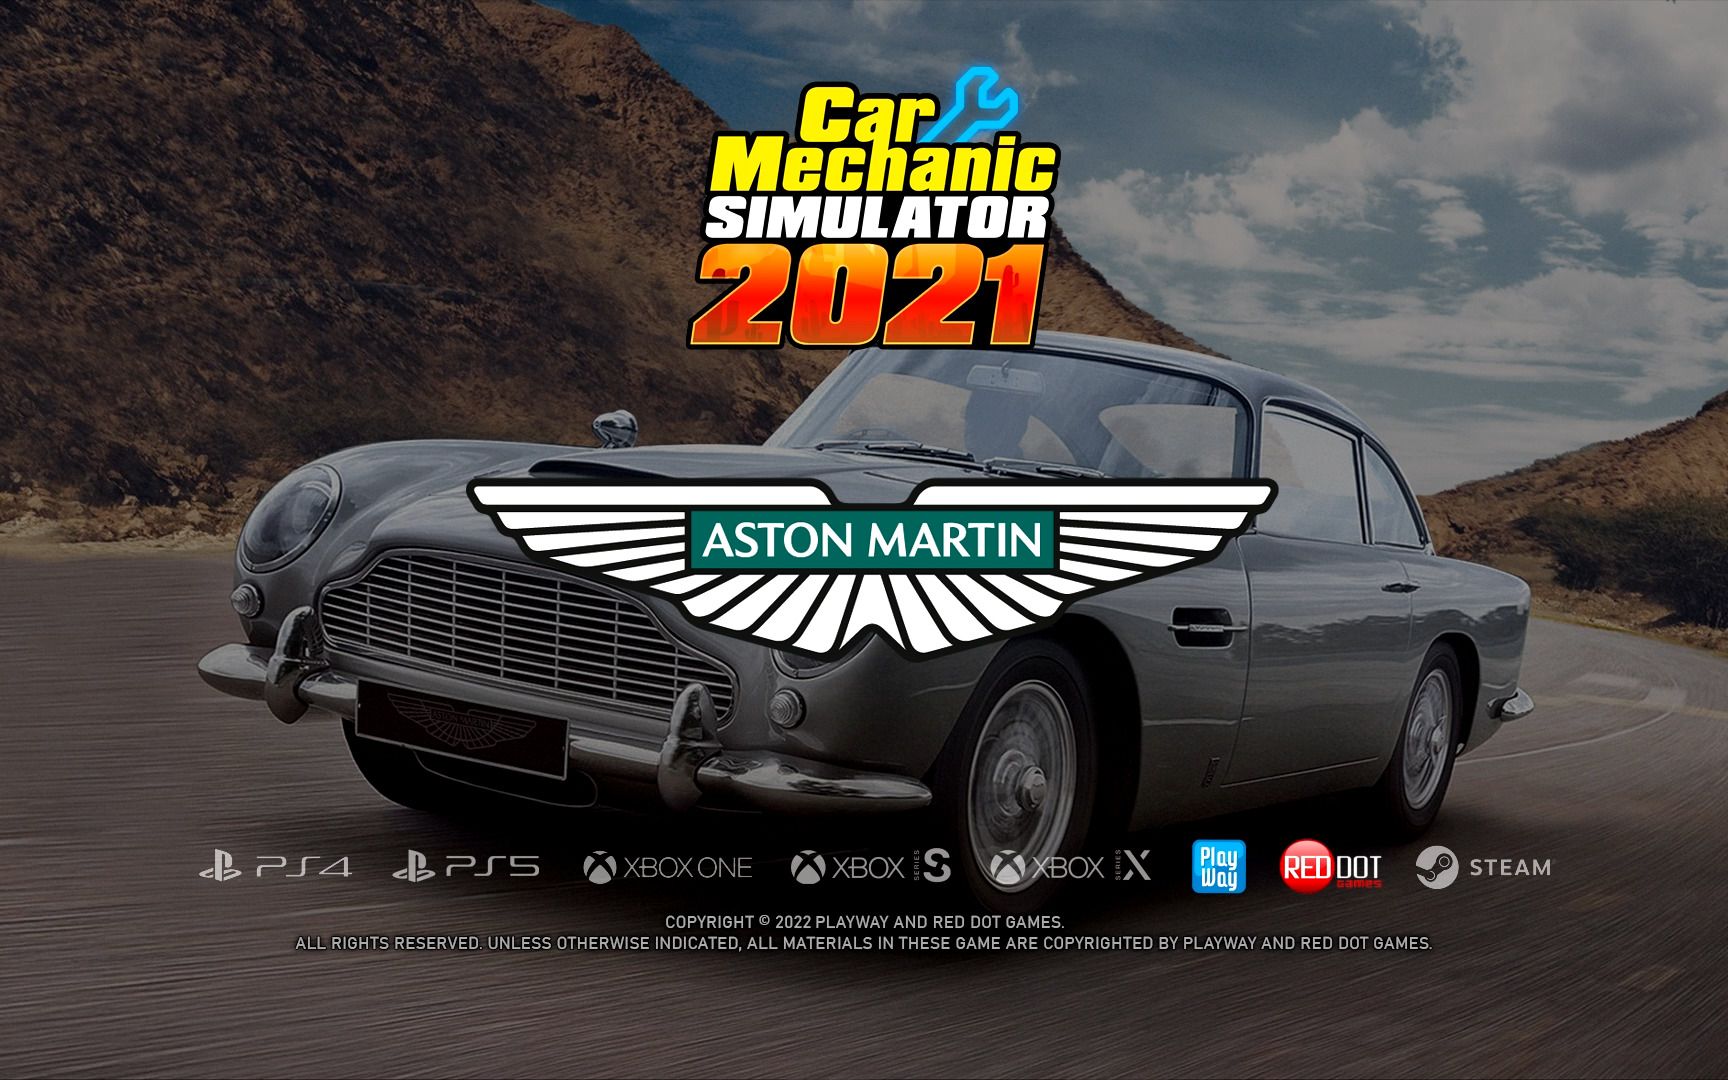 游戏预告片 Car Mechanic Simulator 2021 - Aston Martin DLC